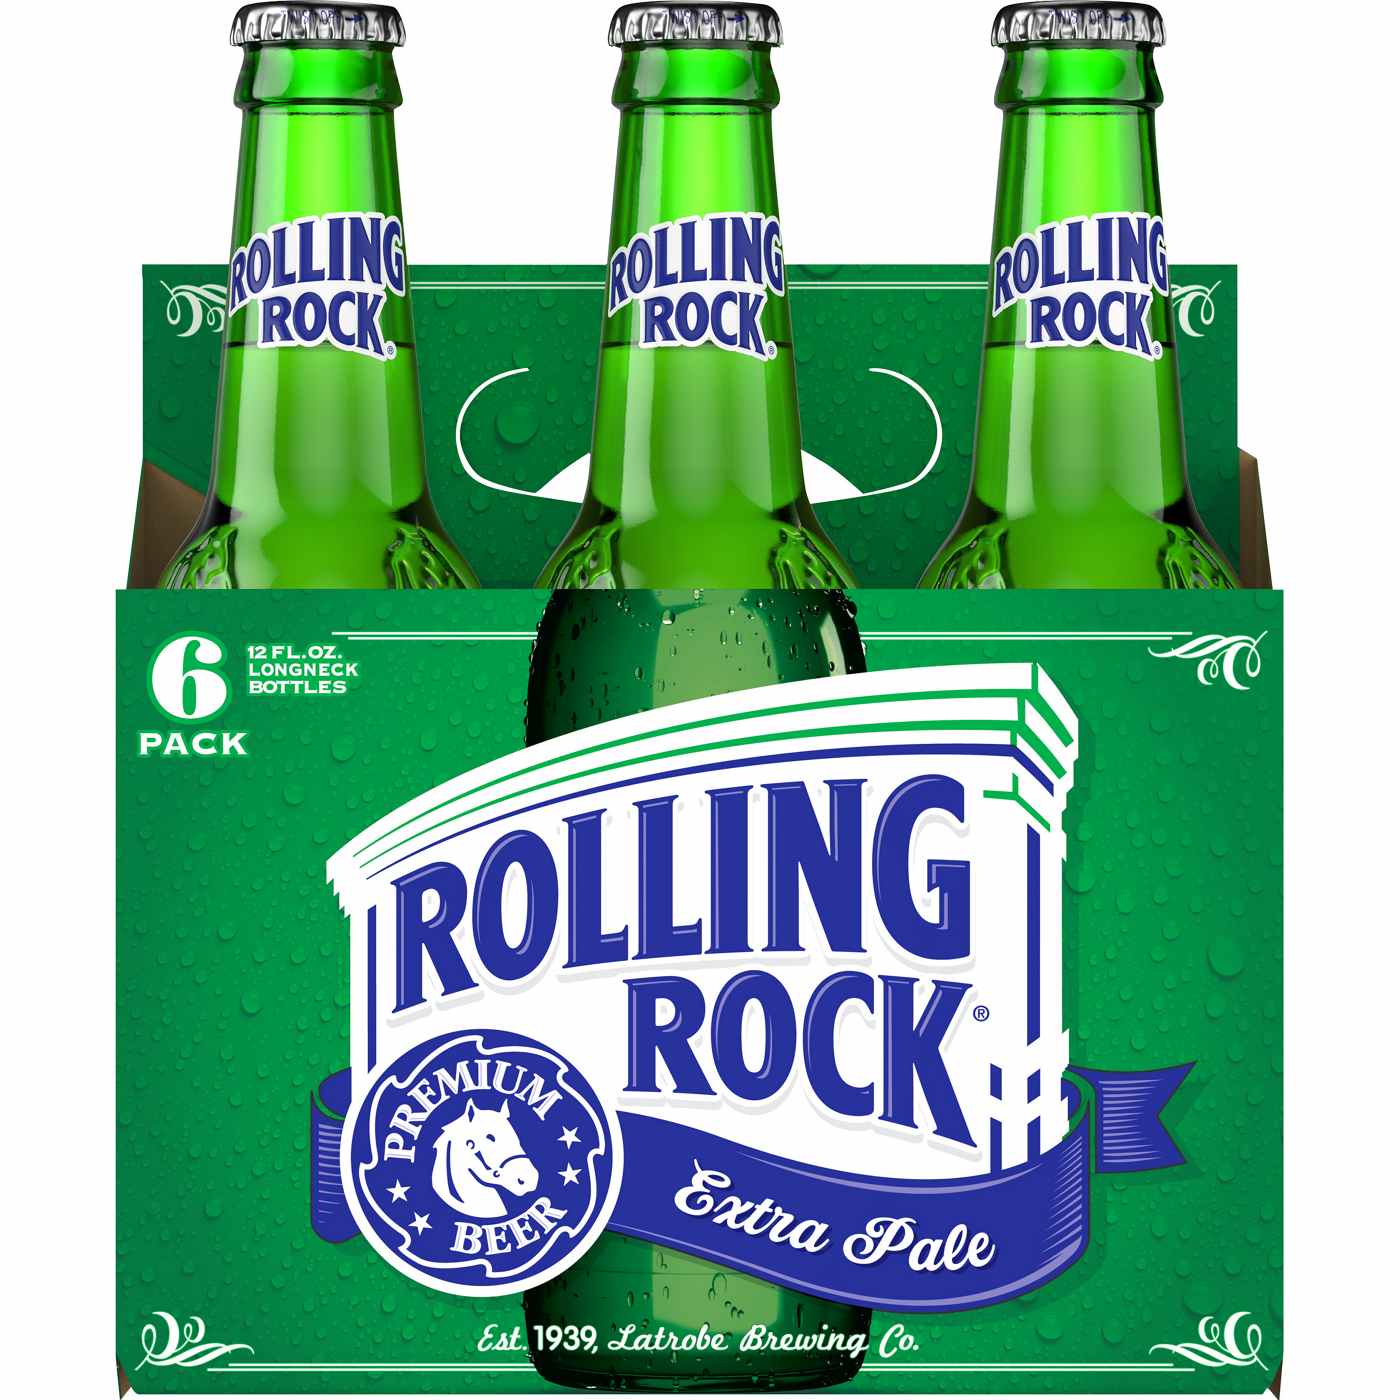 Rolling Rock Premium Extra Pale Beer 6 pk Bottles; image 2 of 2